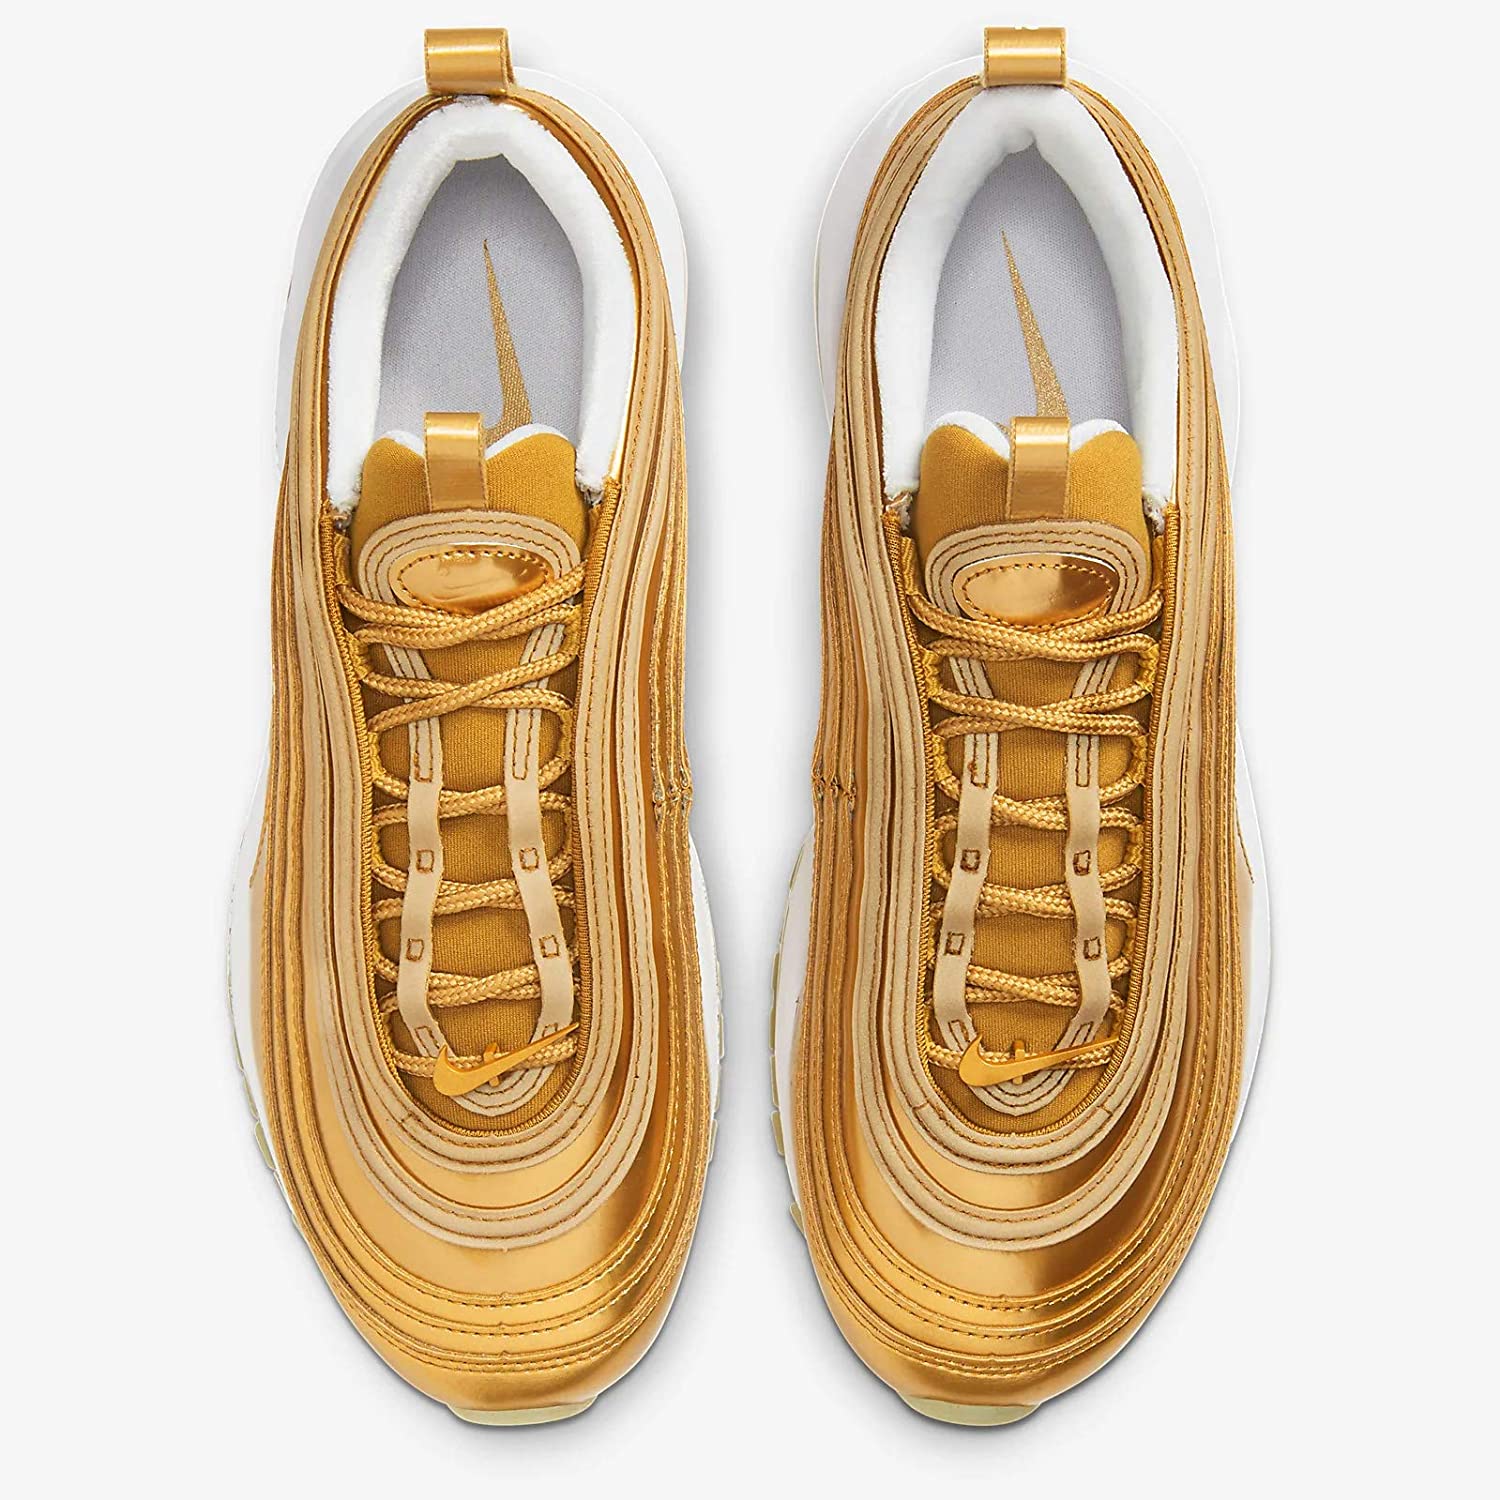 (Women's) Nike Air Max 97 LX 'Metallic Gold' (2020) CJ0625-700 - image 2 of 4